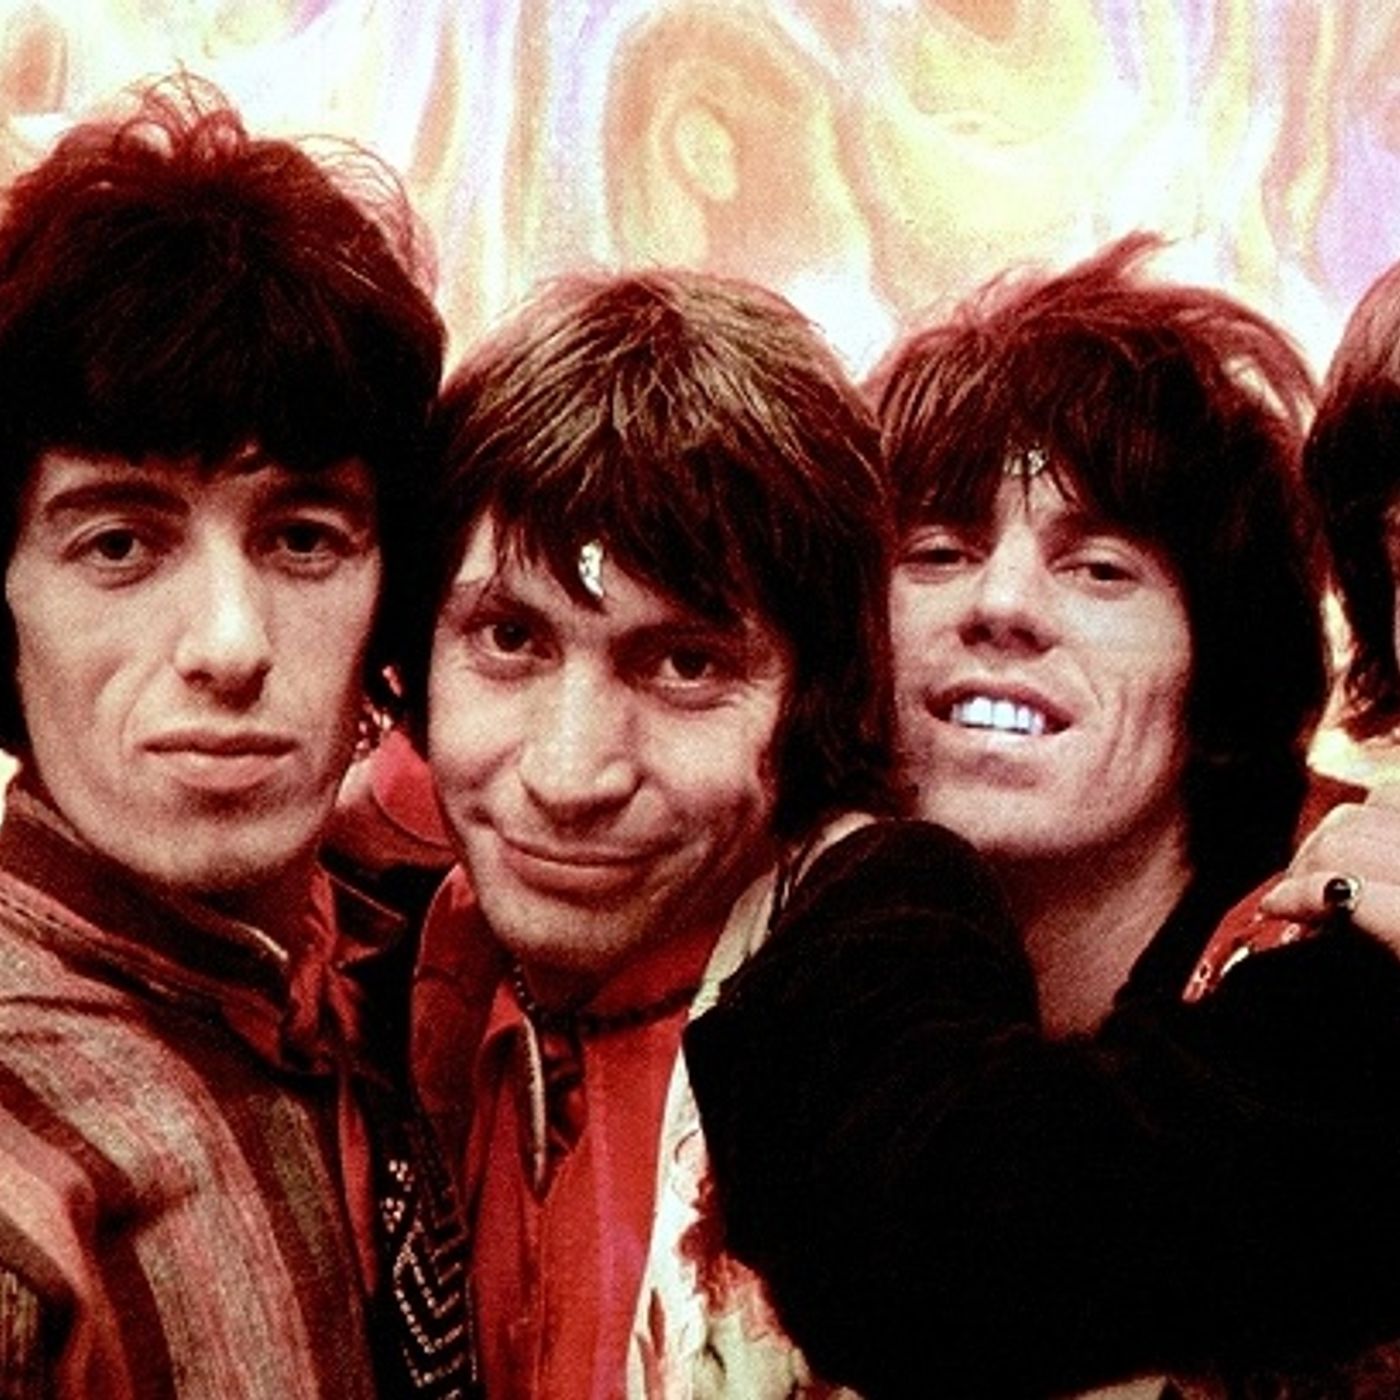 The Rolling Stones in Mono: part III